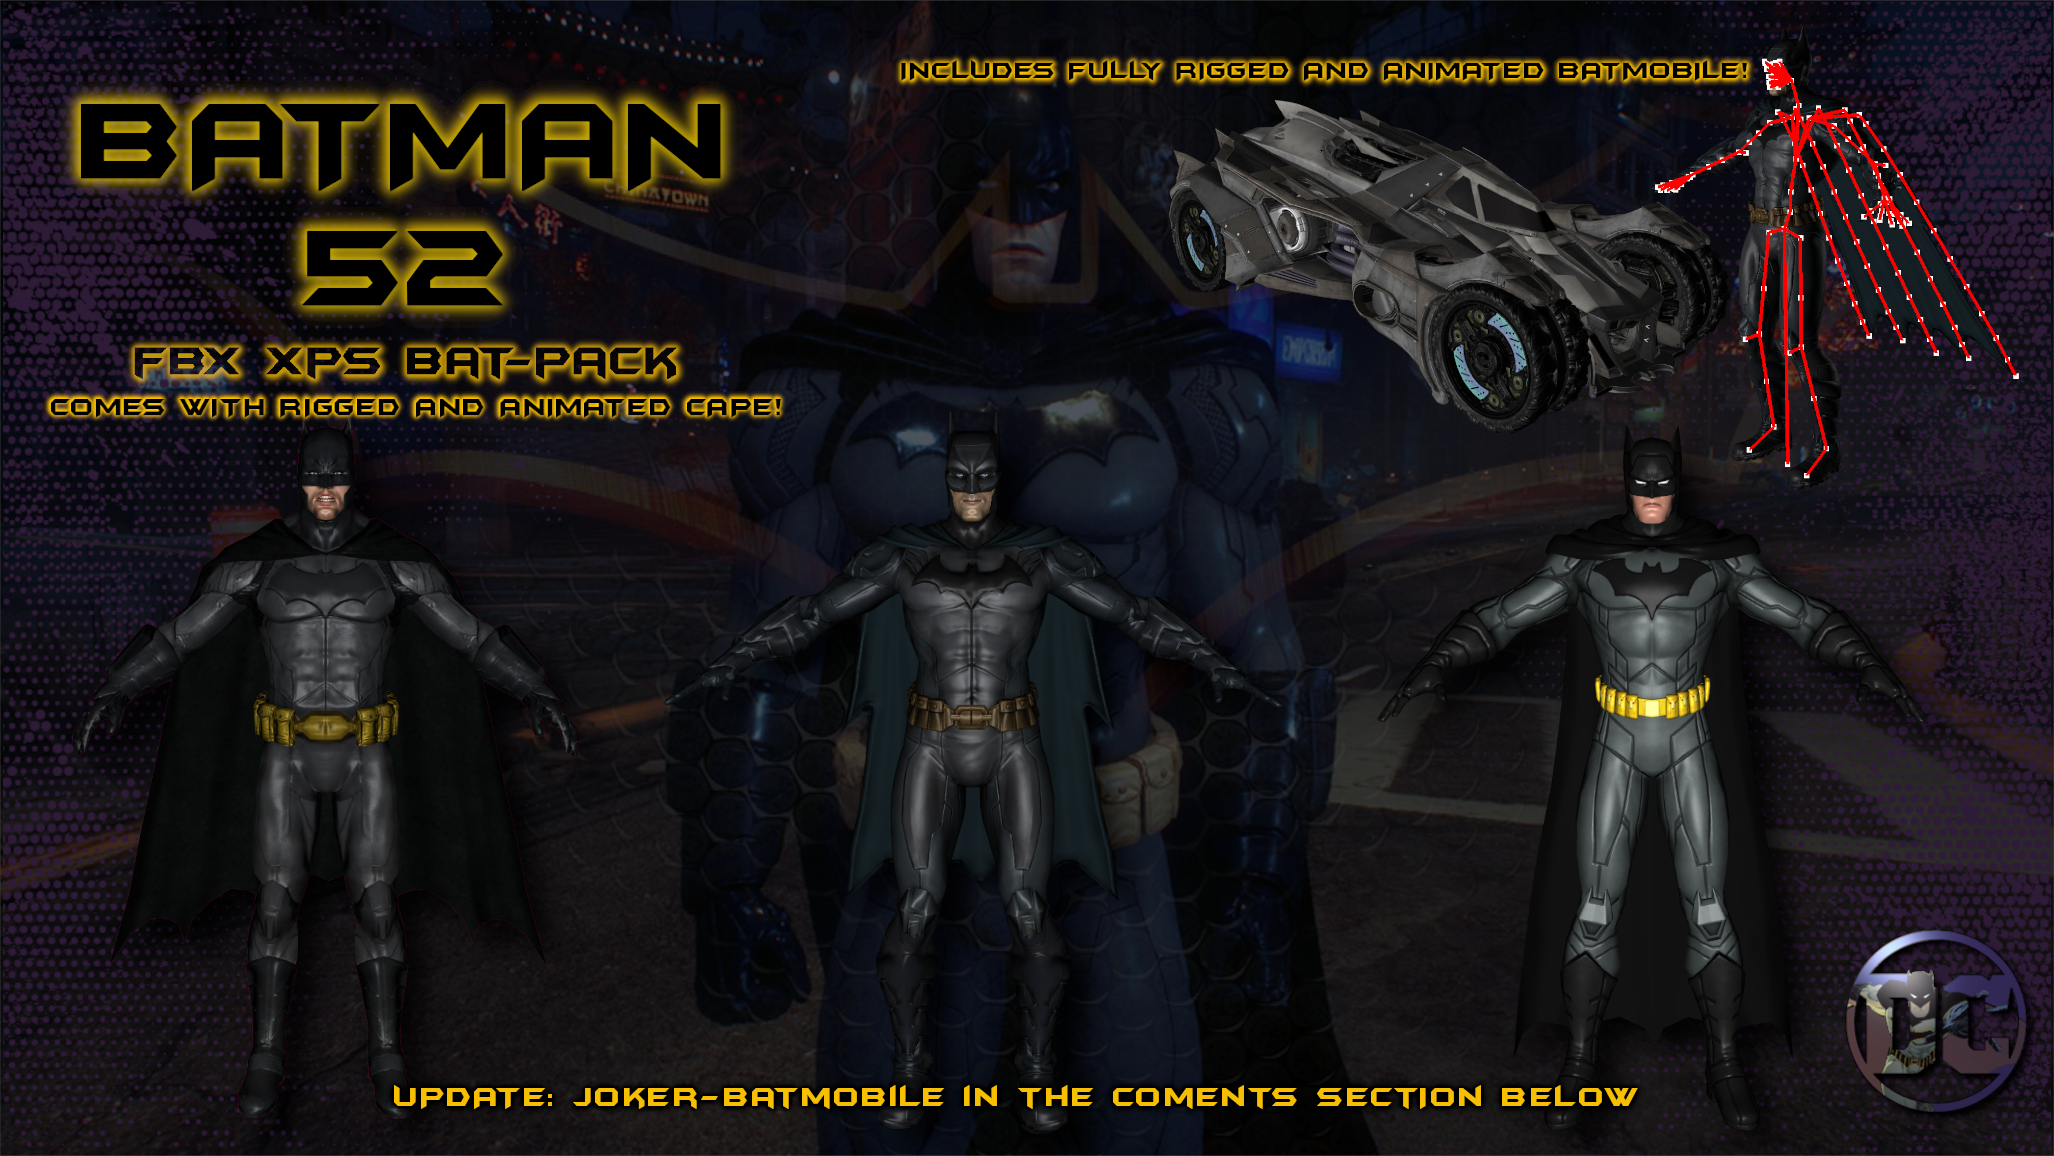 Batman 52 Bat-Pack (FBX XPS DOWNLOAD) by Honorsoft on DeviantArt